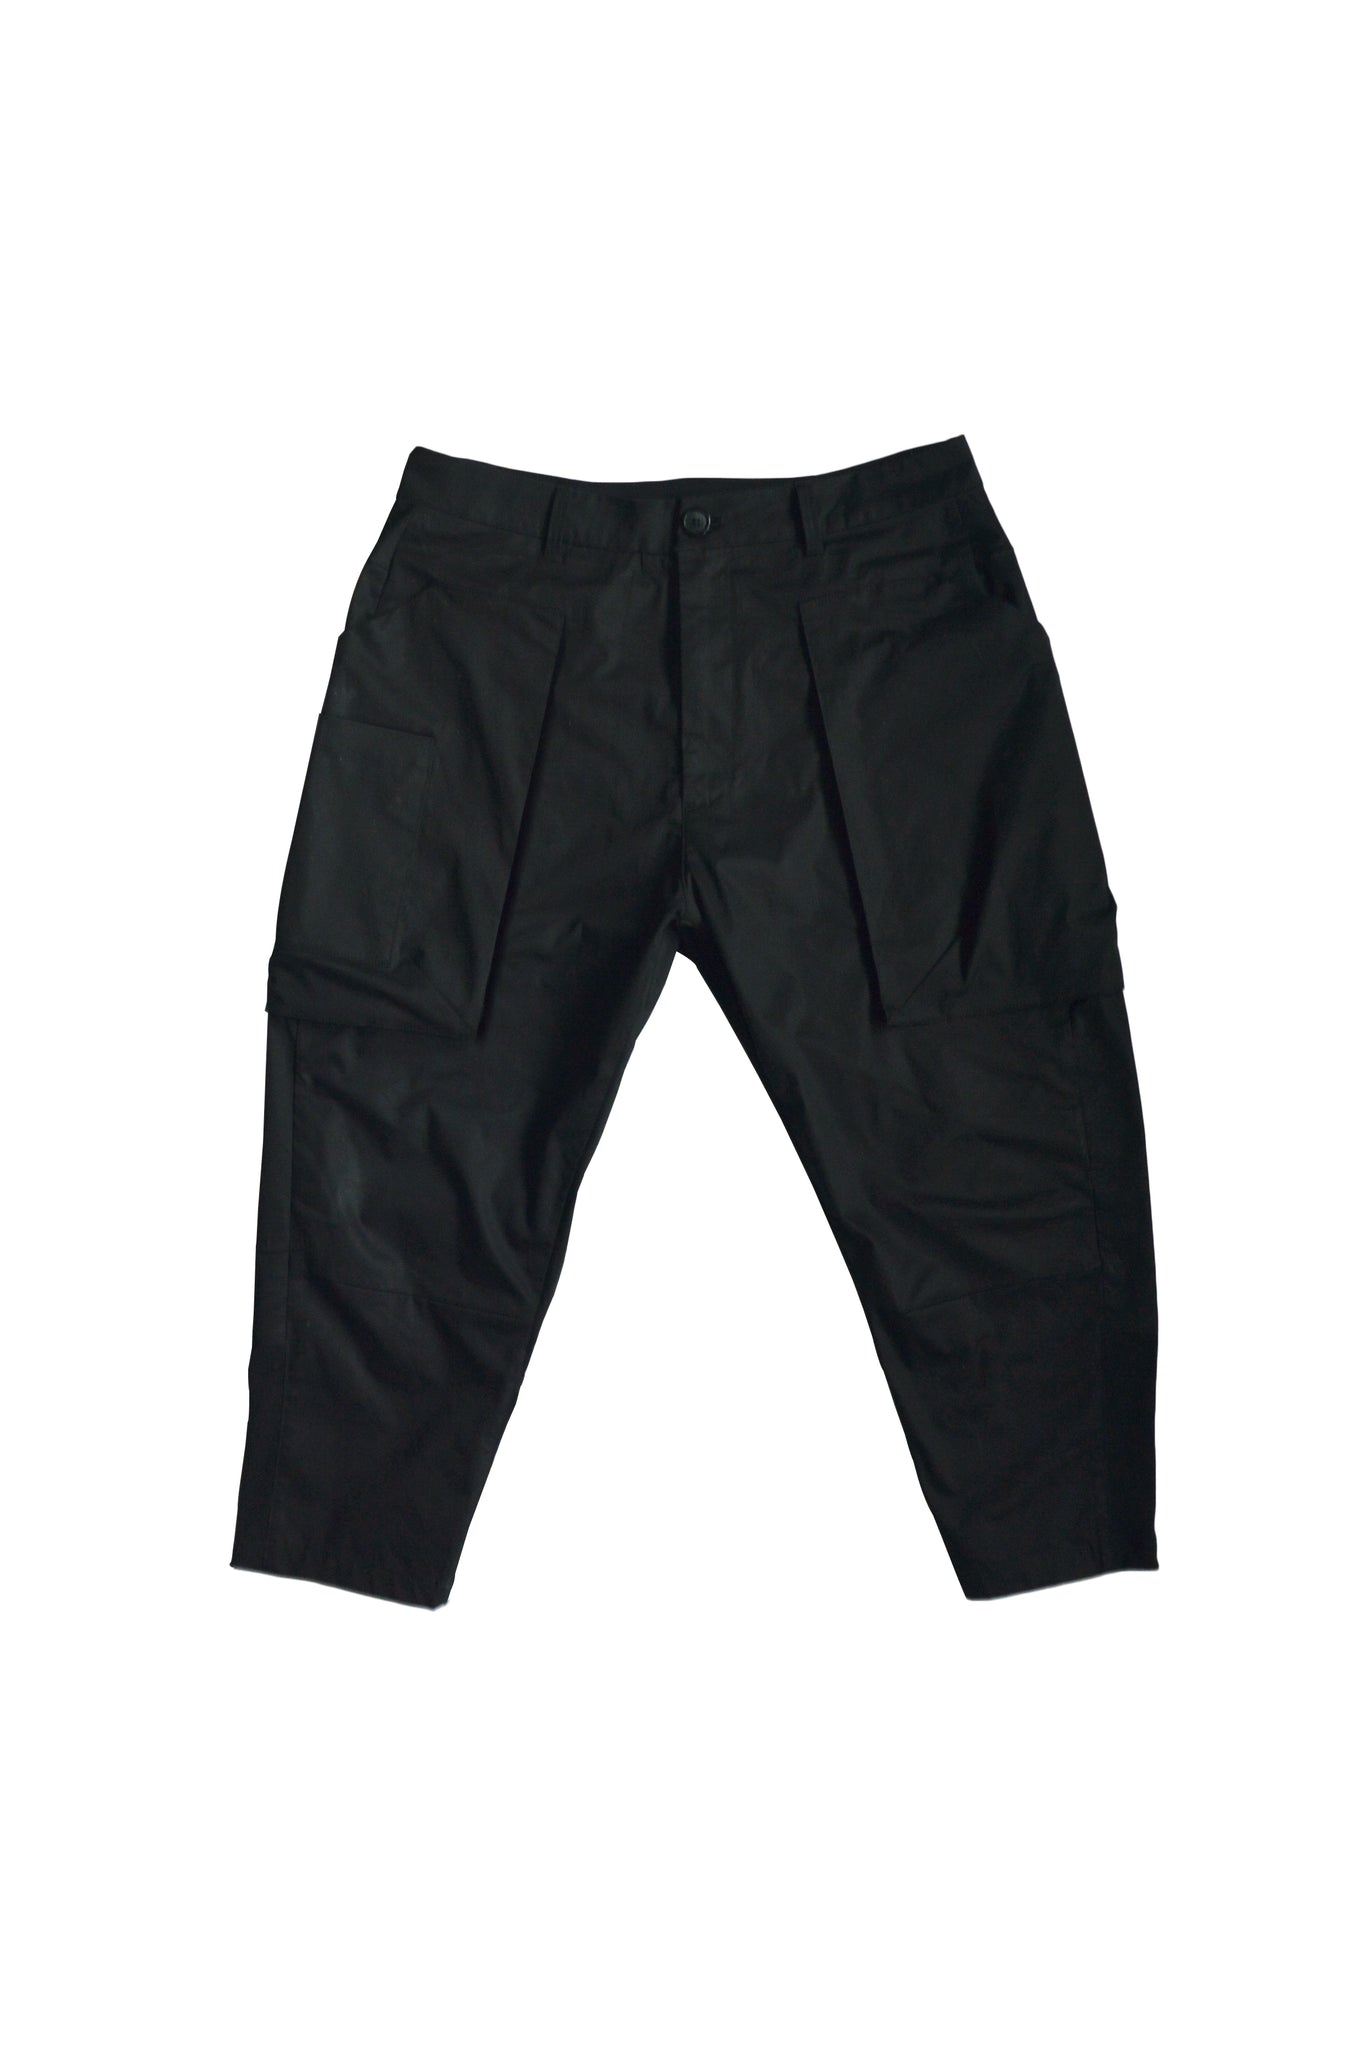 2. "idō" Cropped Pants